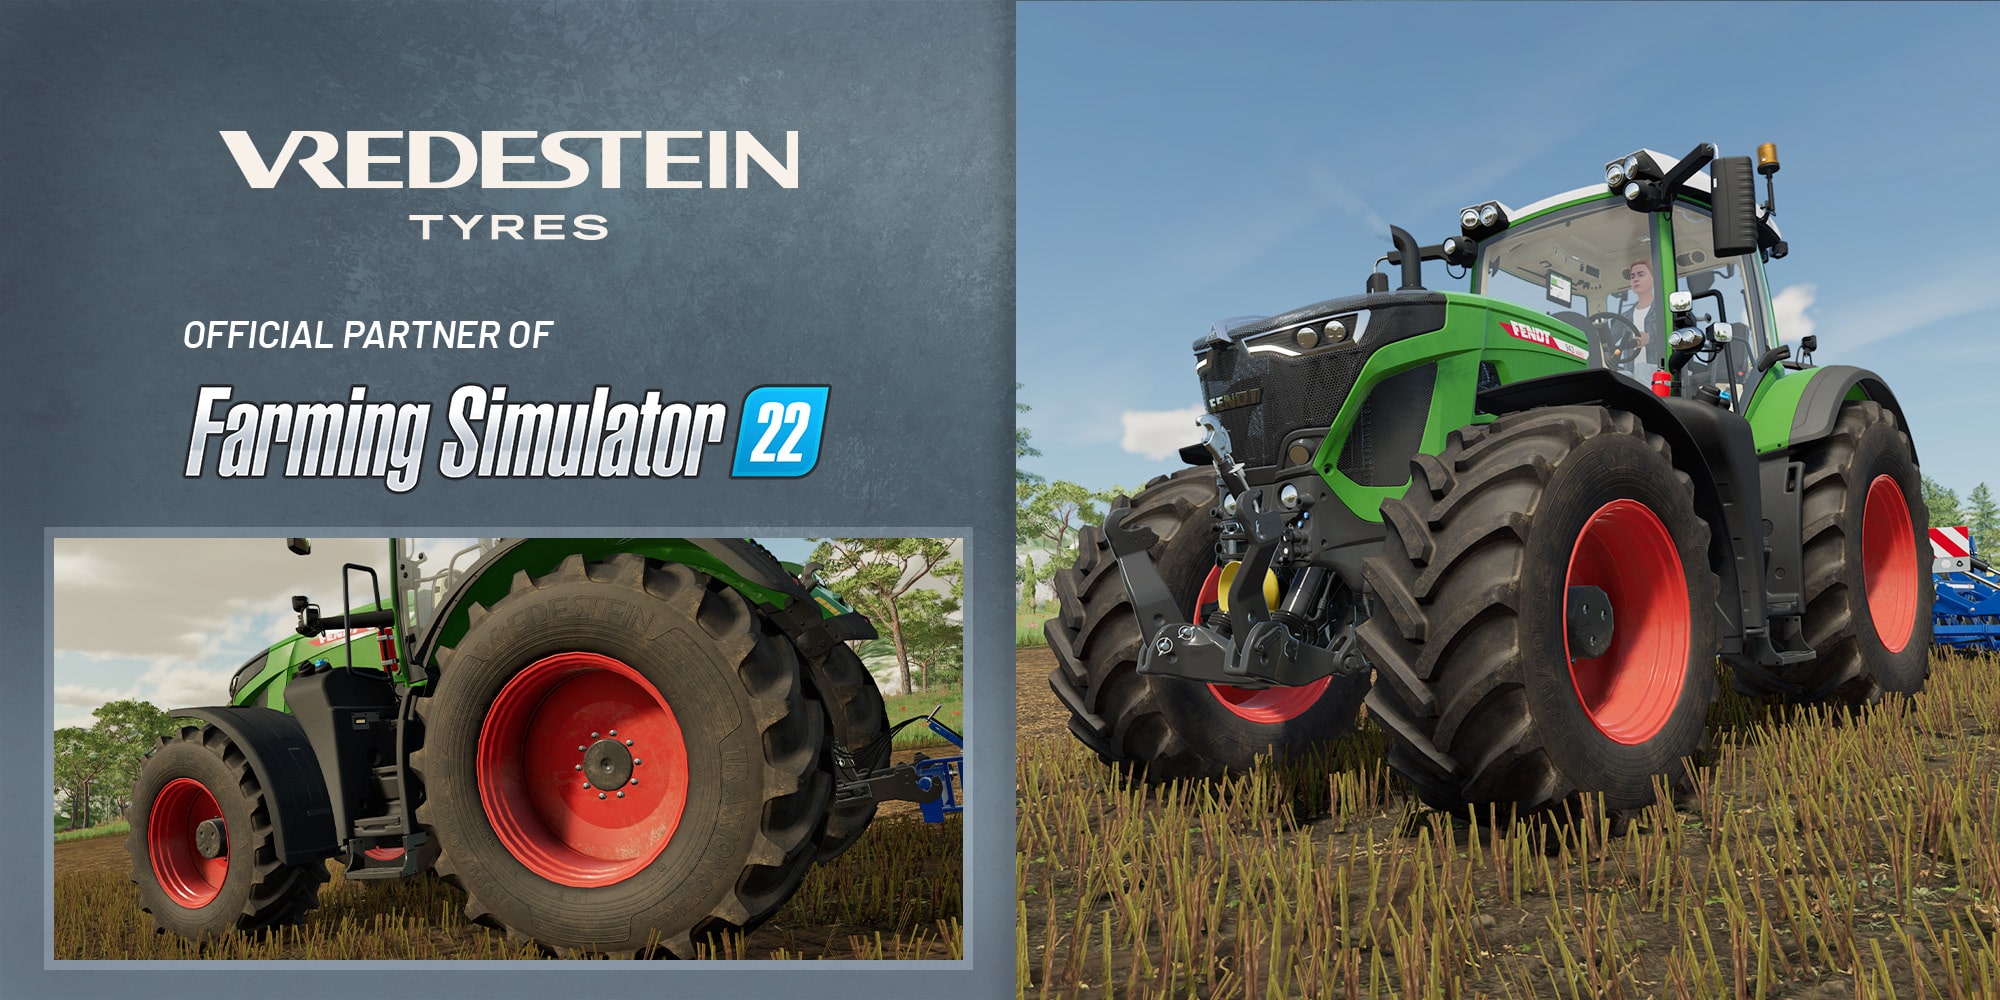 Vredestein thumbnail tires arrive on Farming Simulator 22